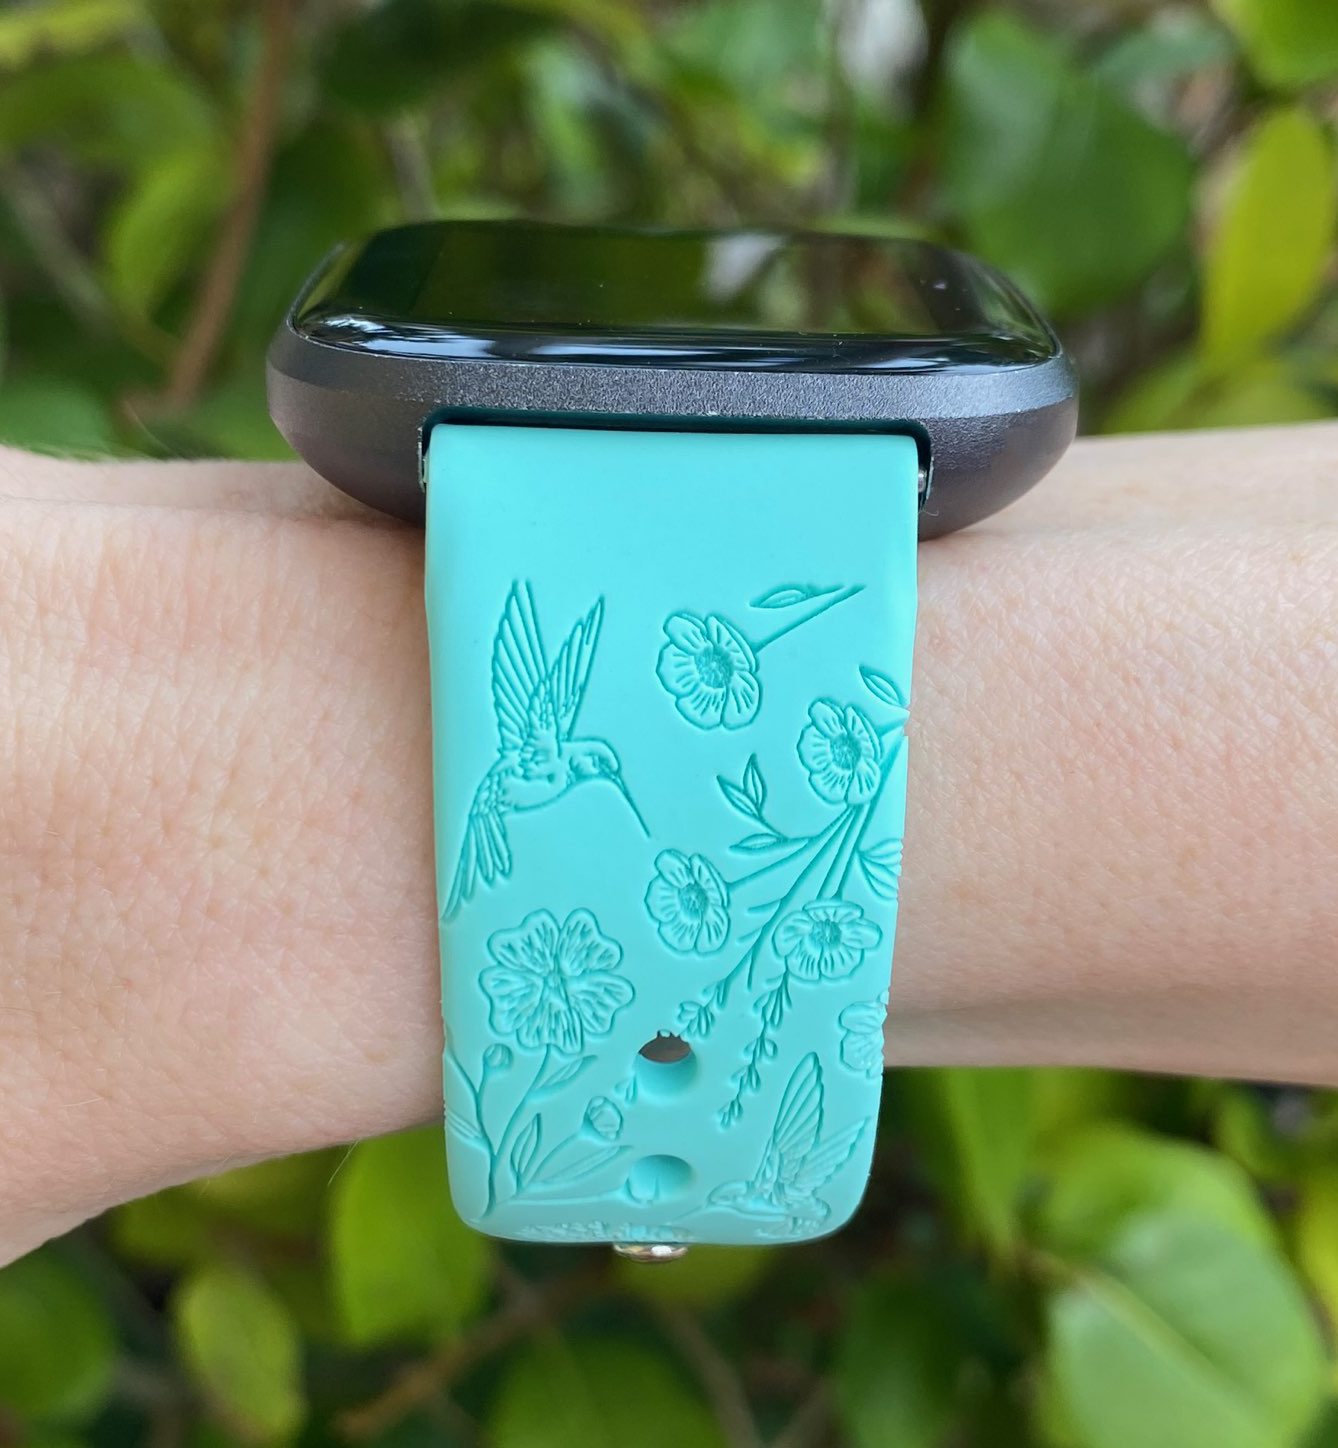 Hummingbird Fitbit Versa 1/2 Watch Band